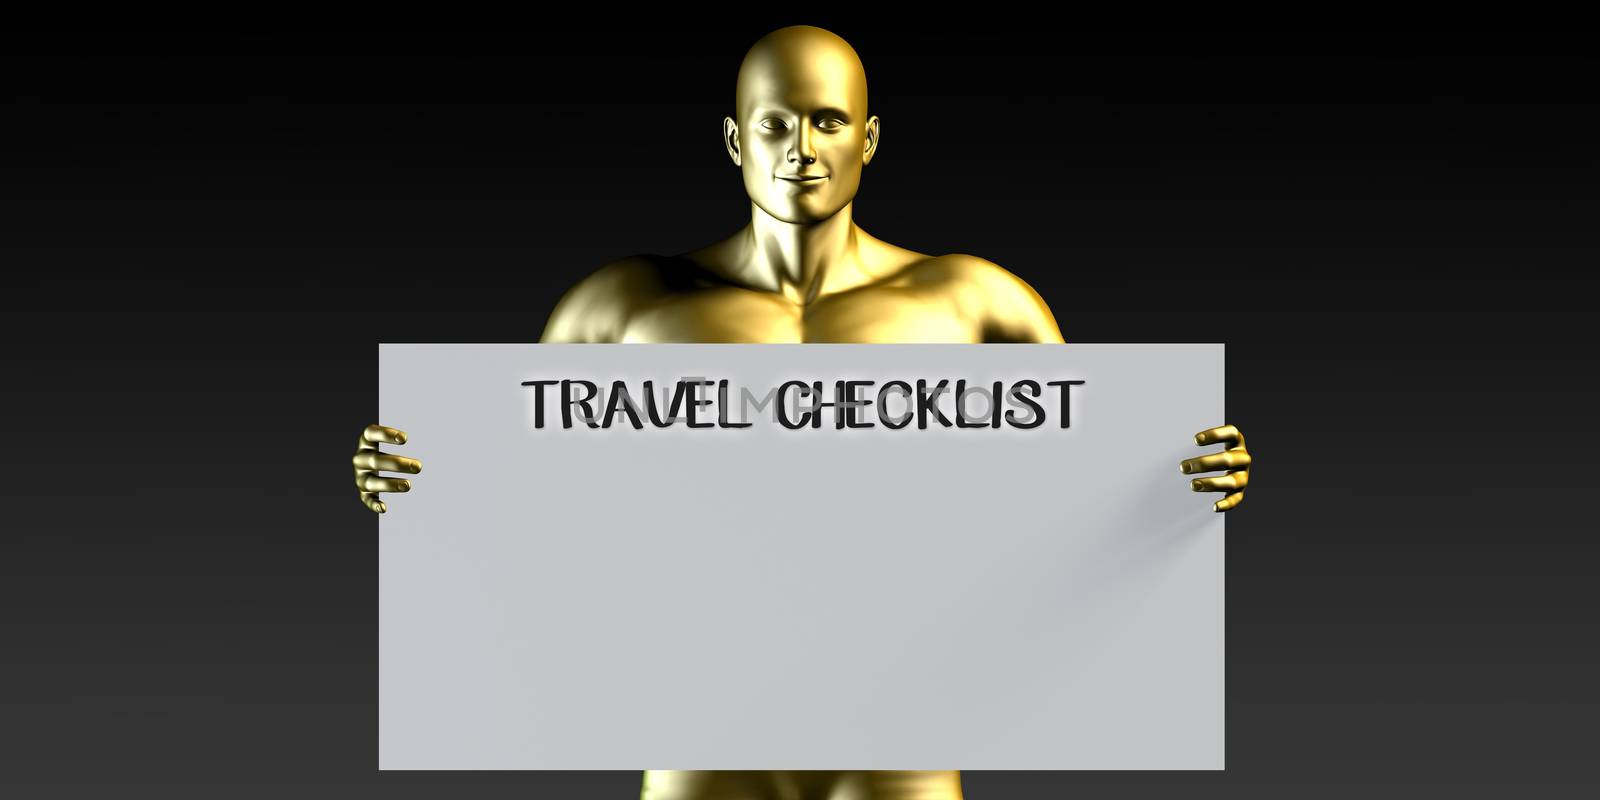 Travel Checklist by kentoh